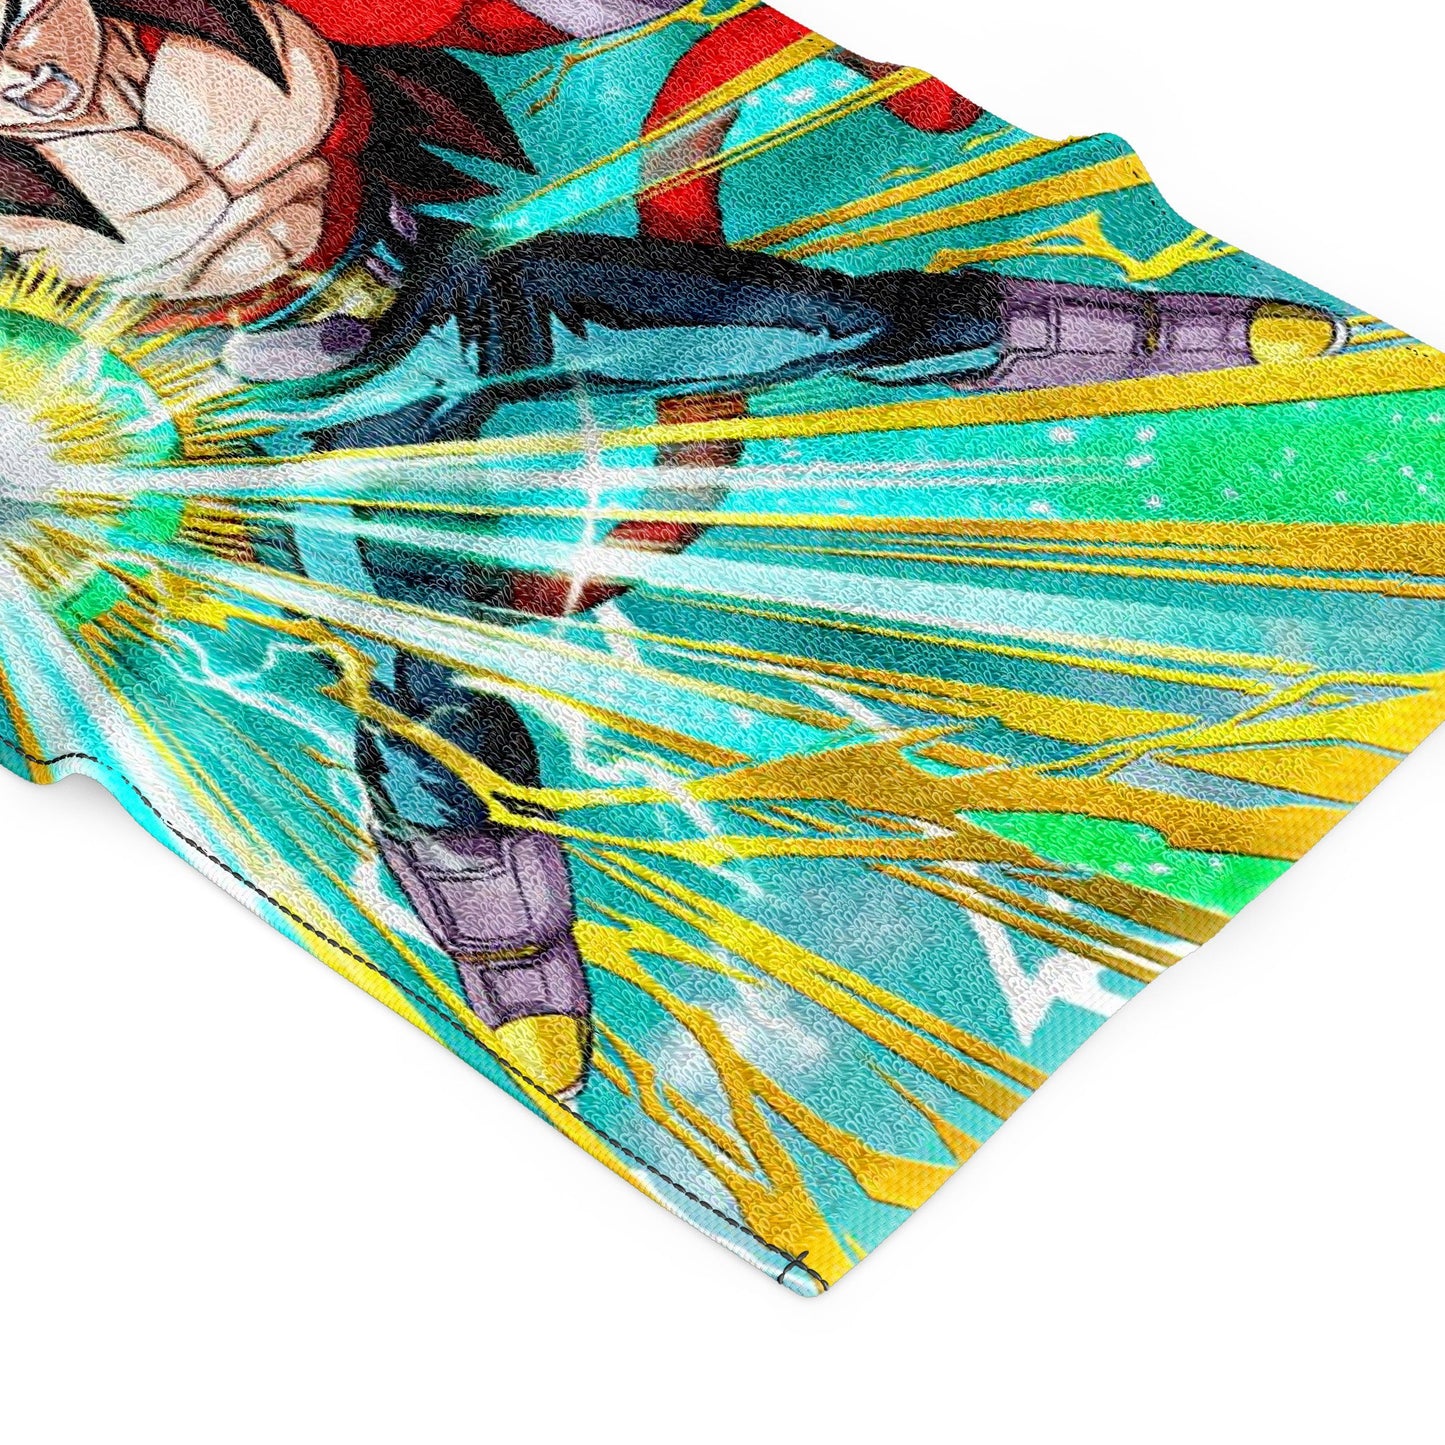 Dragon Ball GT Vegeta SSJ4 Towel